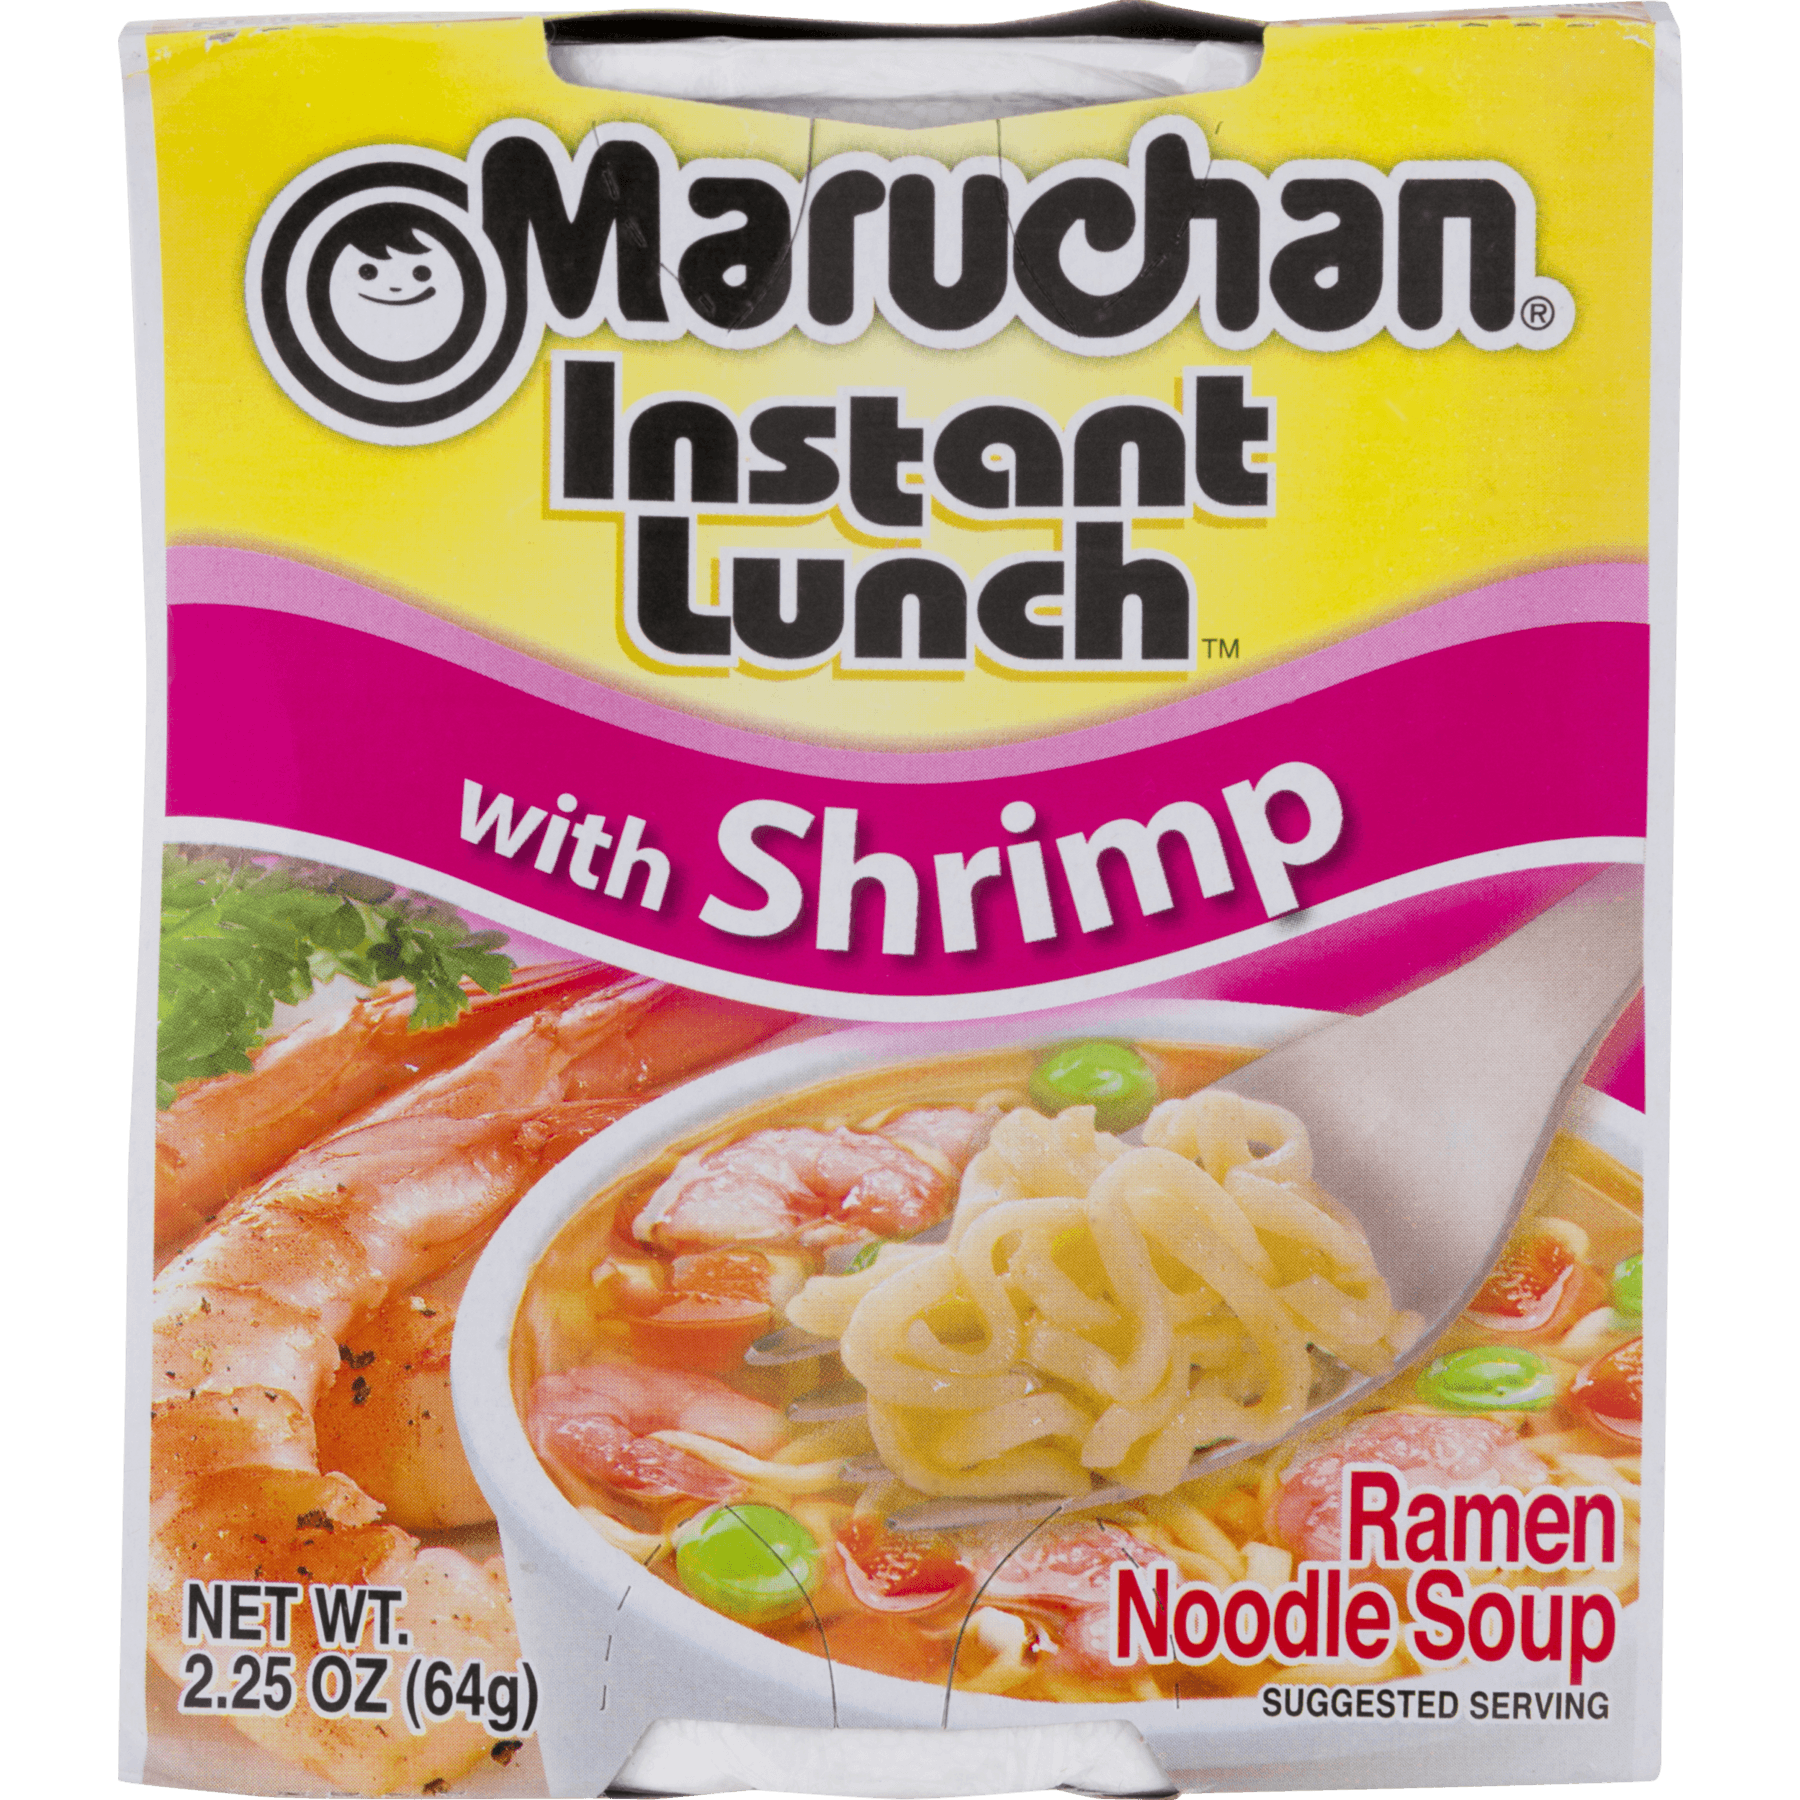 Instant Lunch Maruchan Logo - Maruchan Instant Lunch W Shrimp Instant Lunch, 2.25 Oz